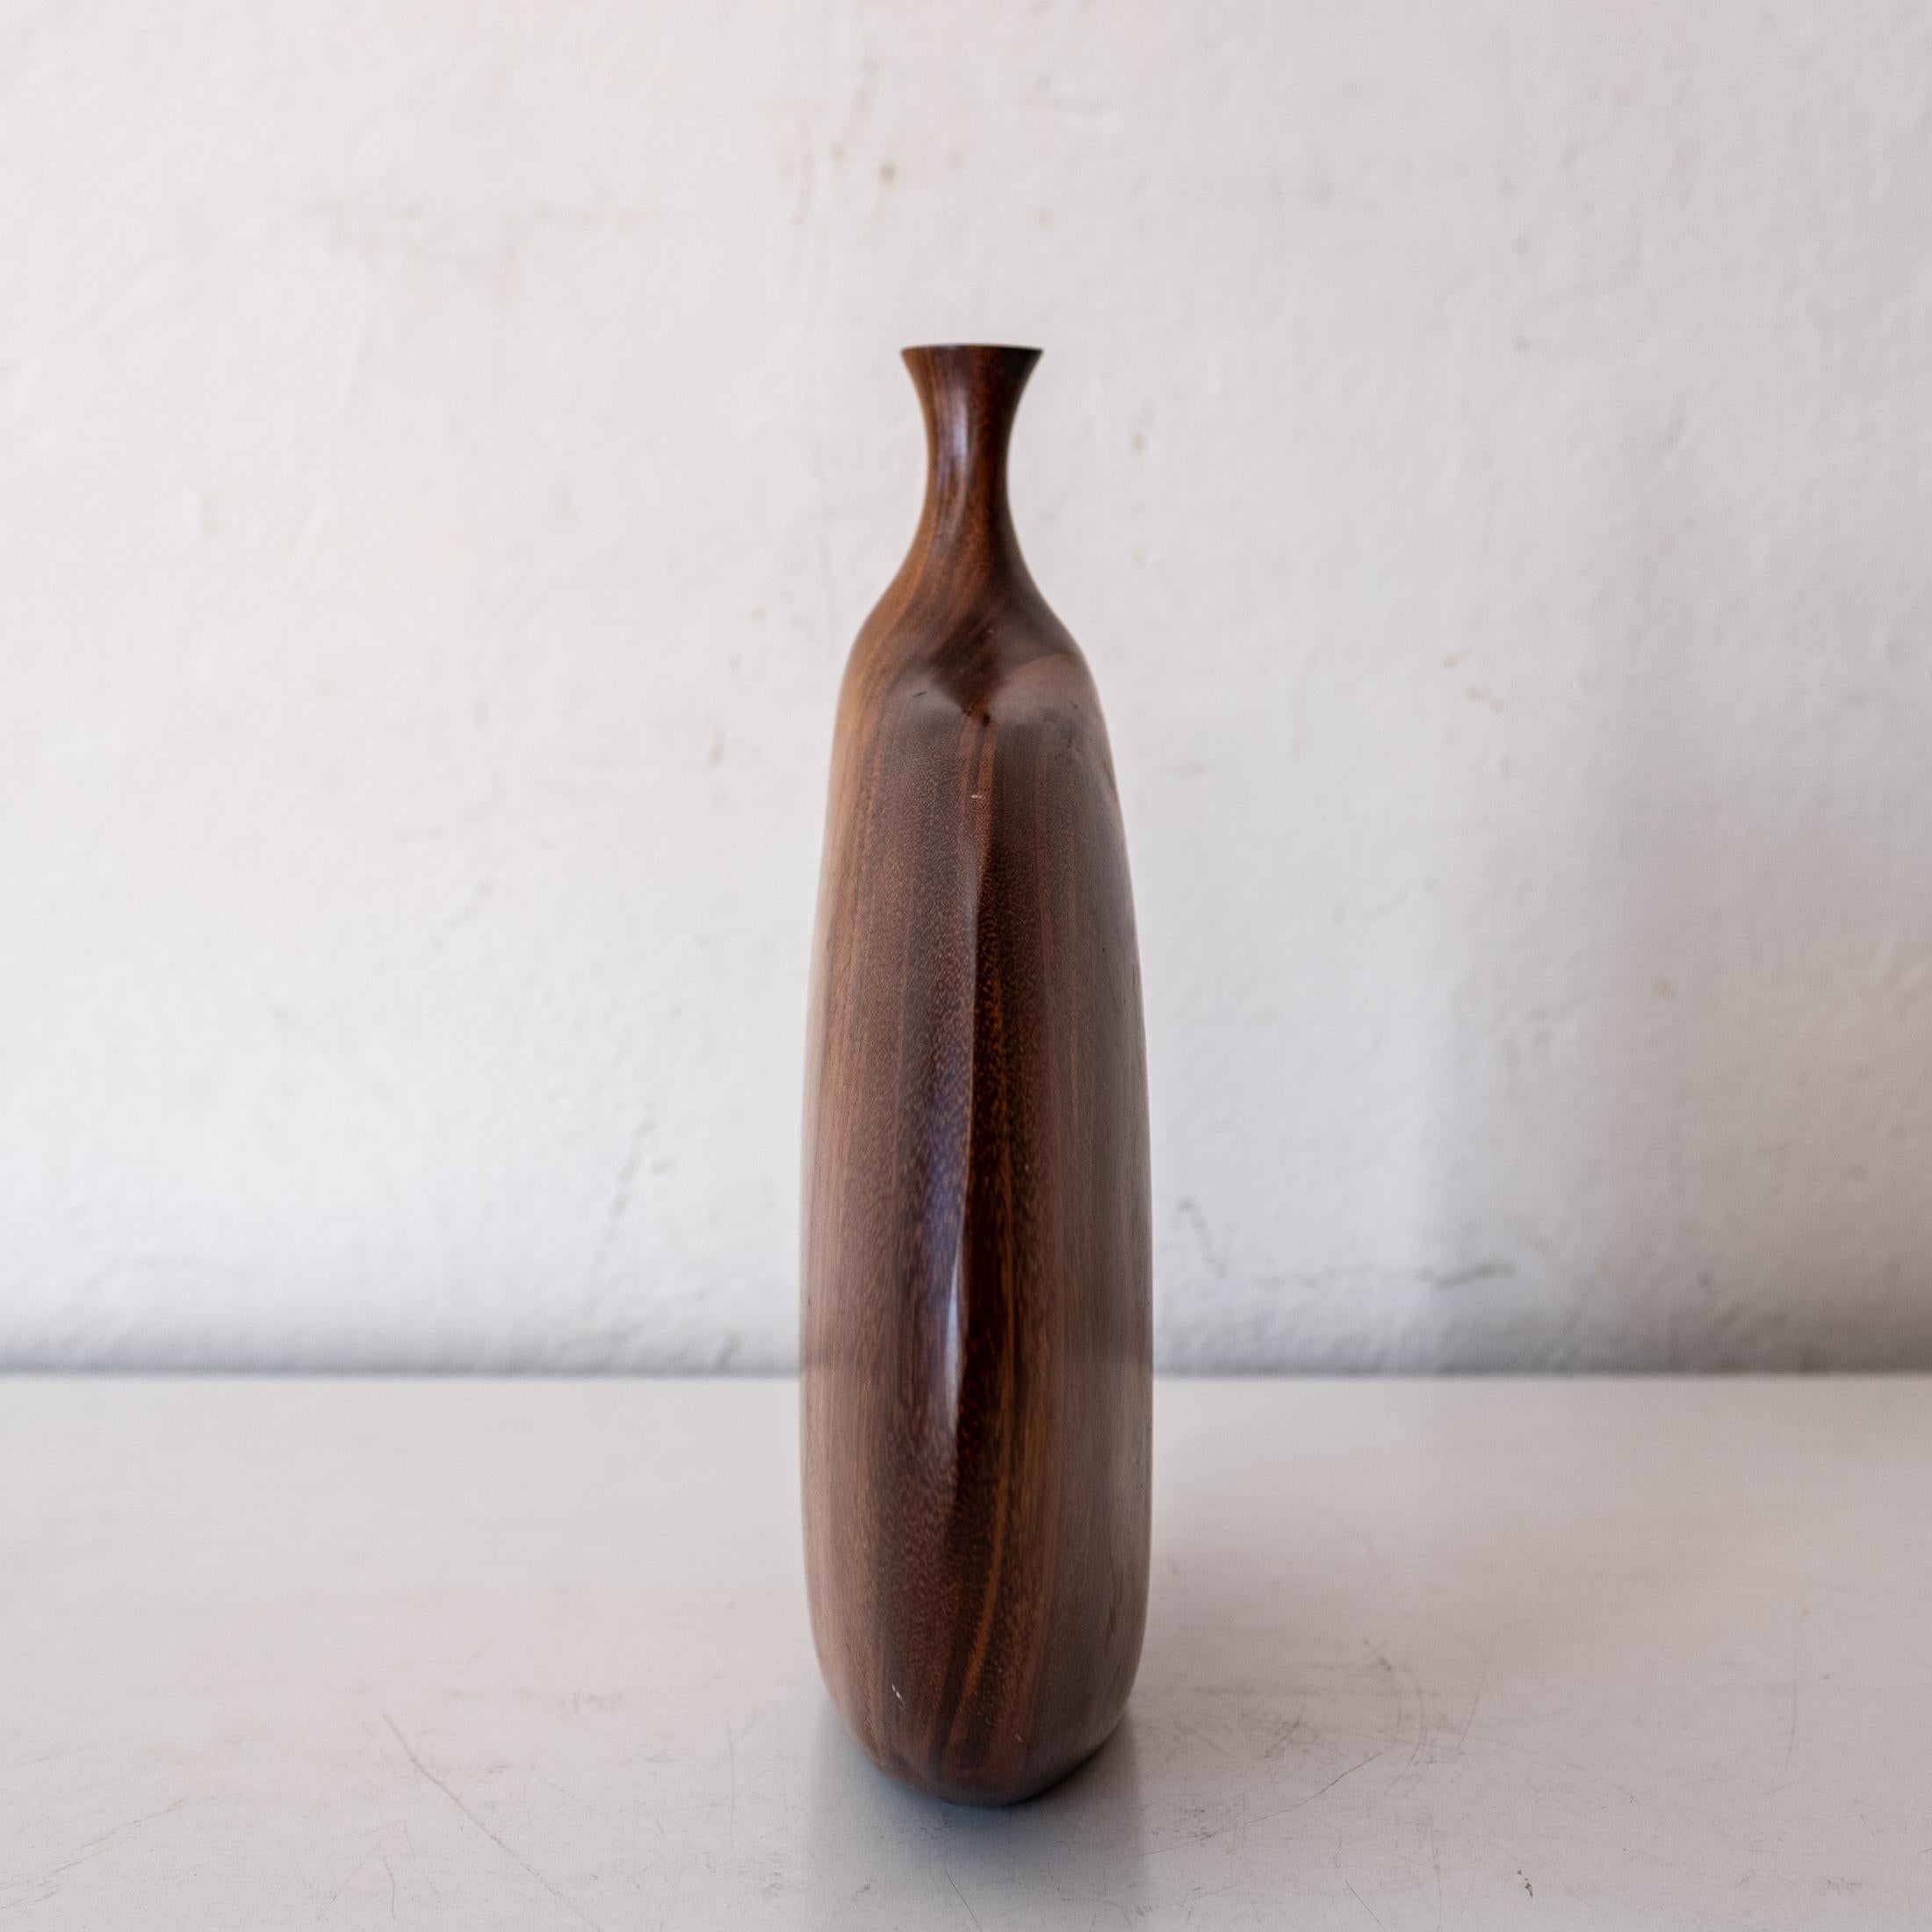 American California Craft Sculptural Wood Vase by Doug Ayers